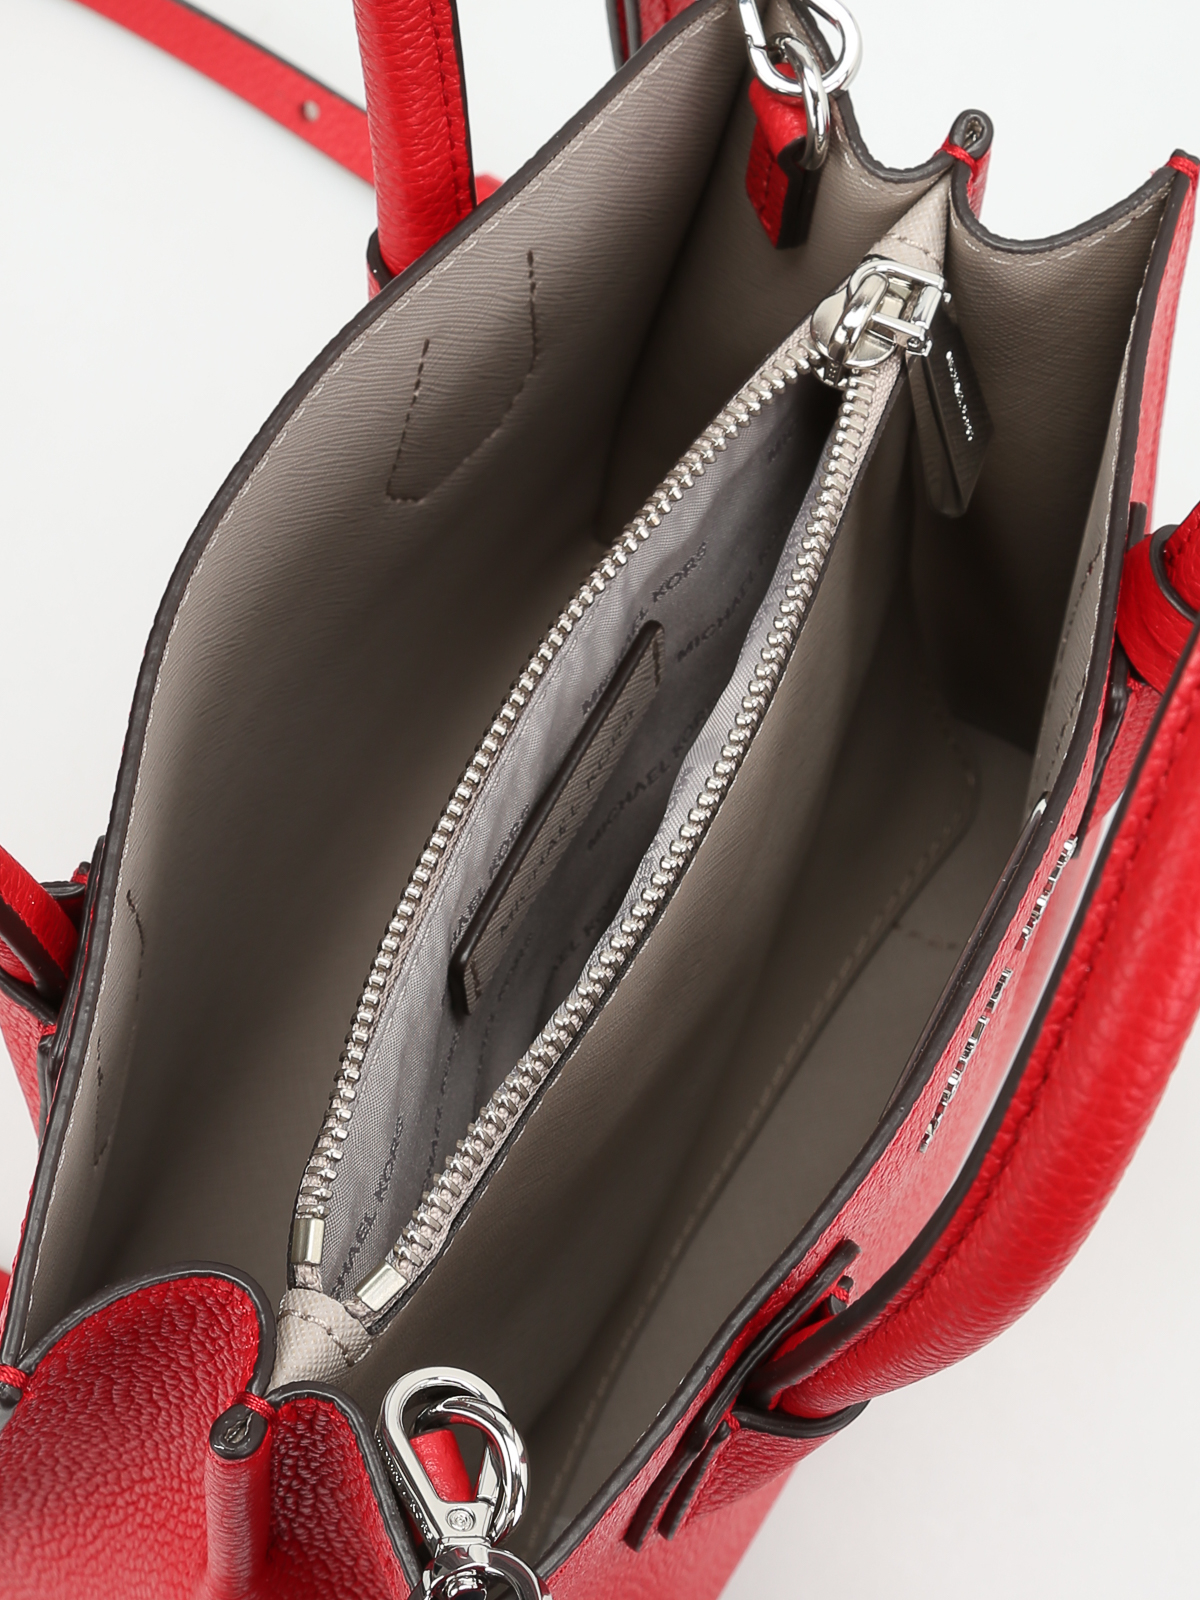 Michael Kors Women's Mercer Medium Handbag